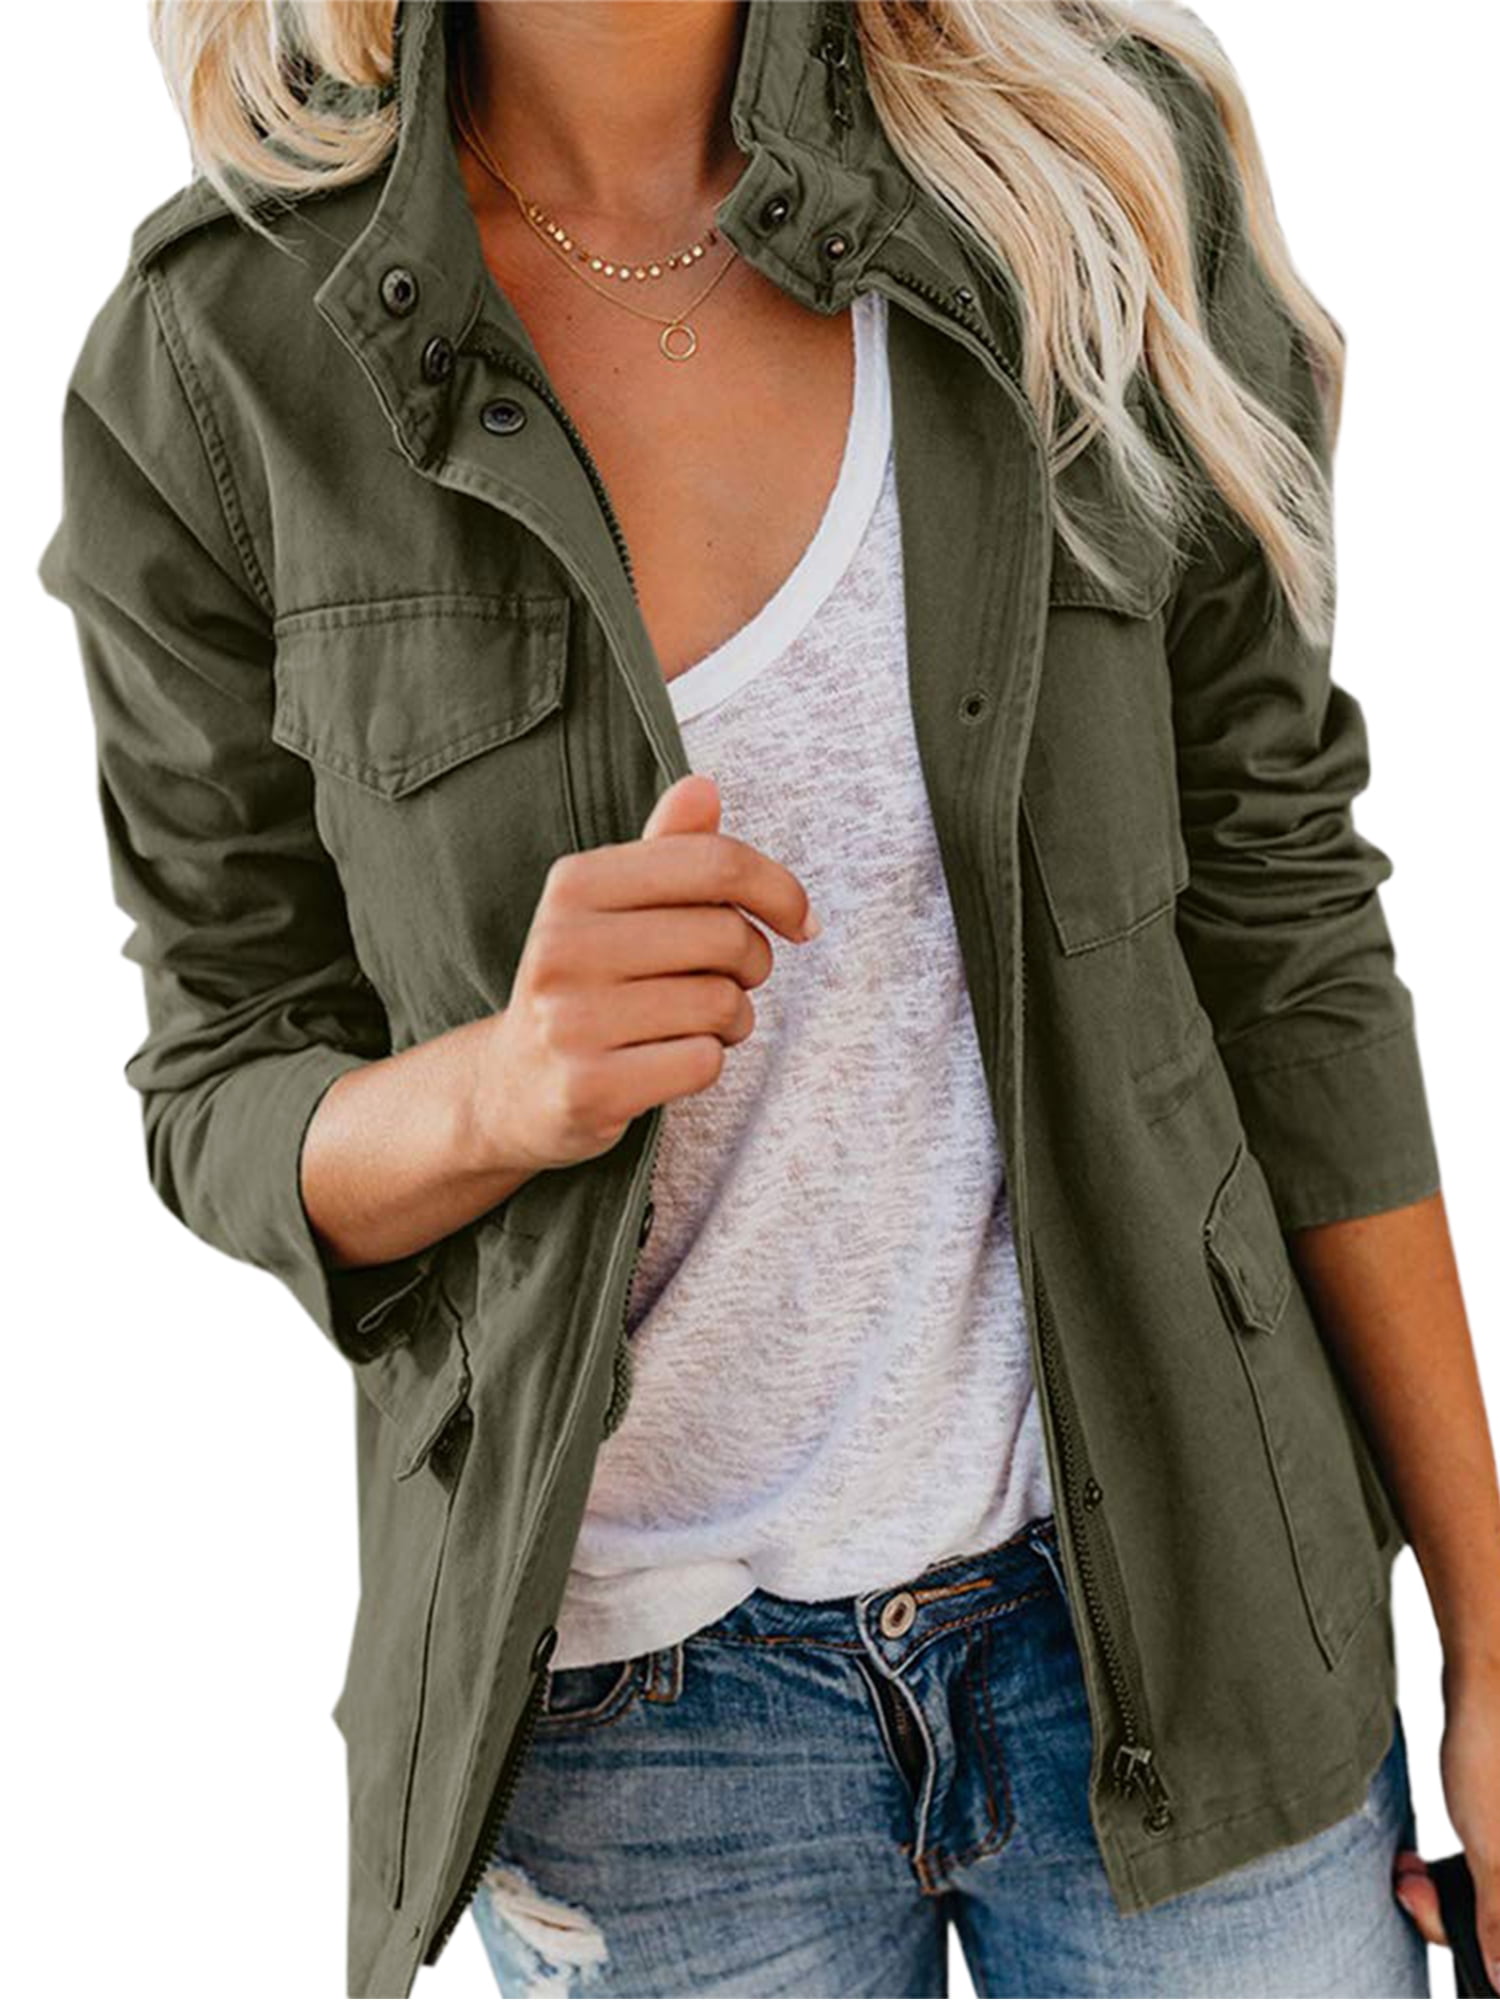 MAWCLOS Women Zipper Utility Jackets Lightweight Outdoor Military Jacket  Lapel Plain Fall Outwear Coat Army Green 4XL